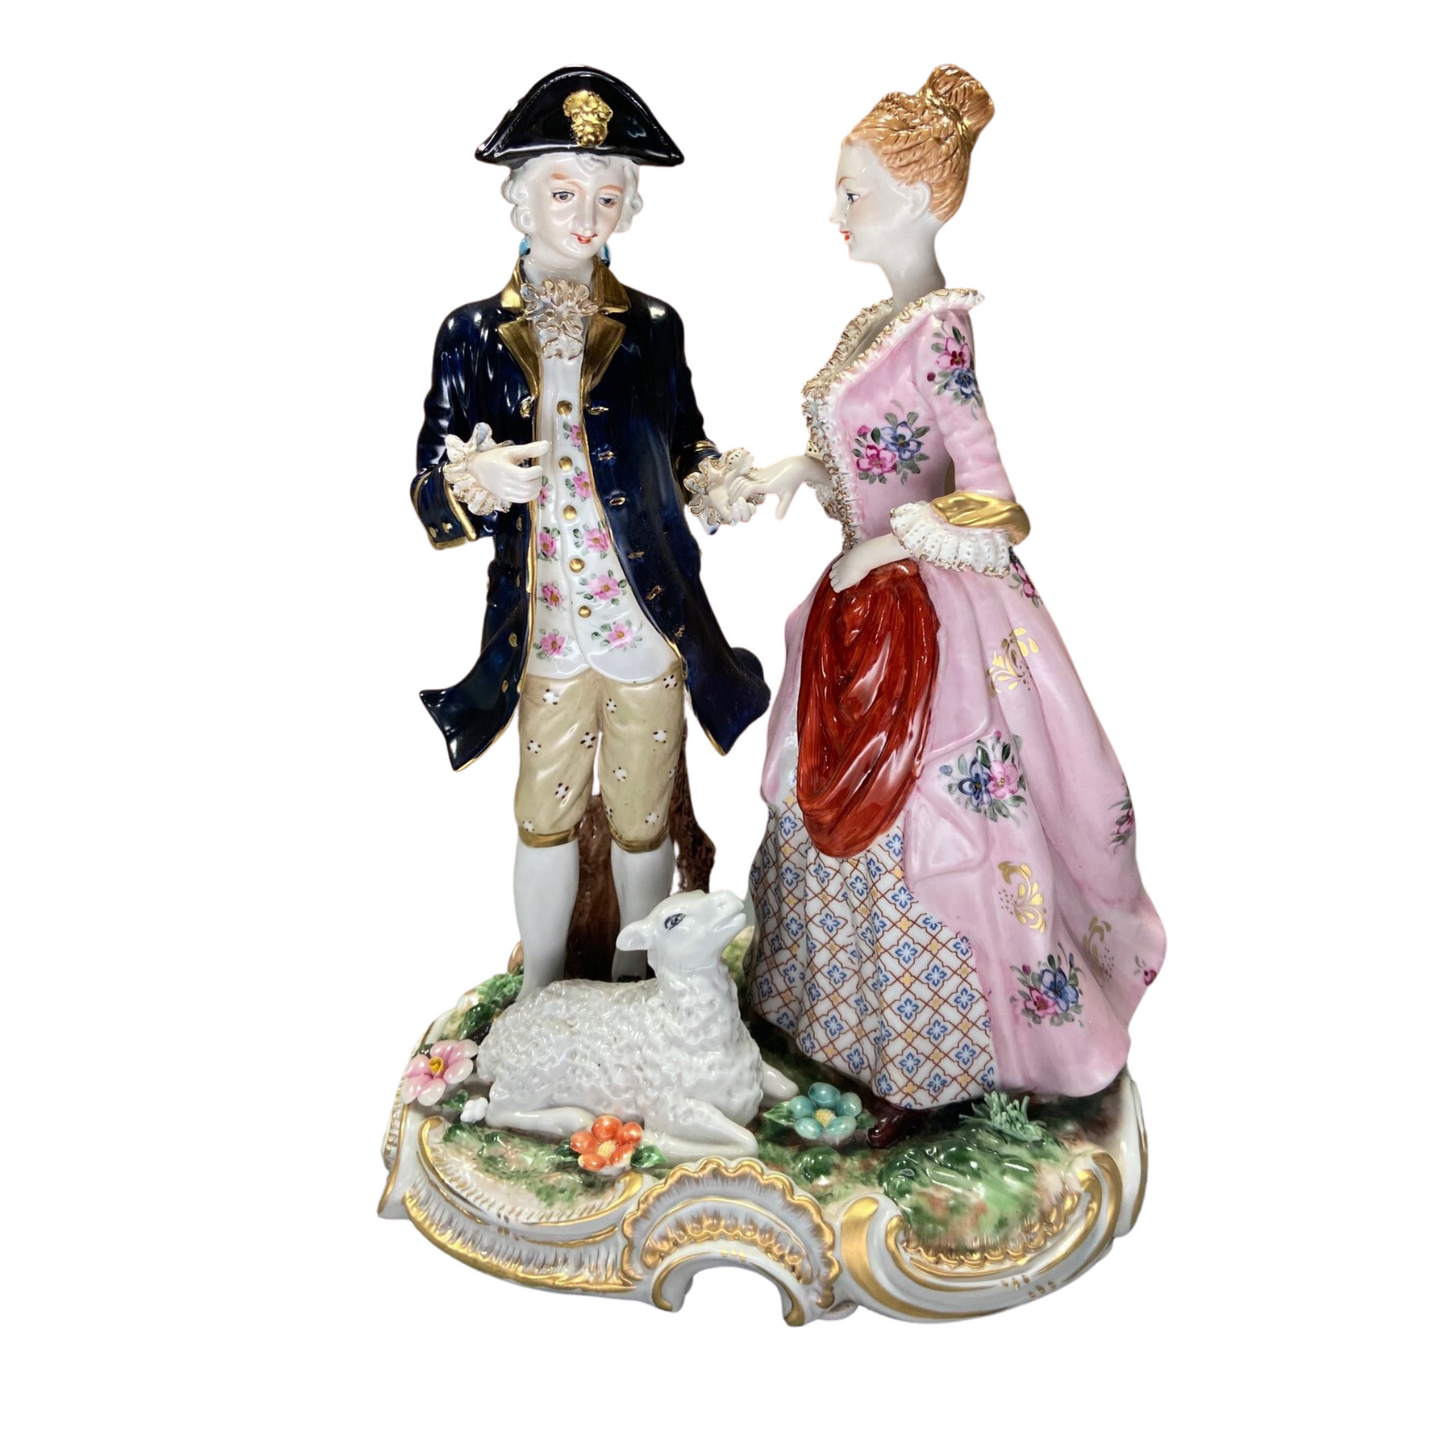 The Courtship Porcelain Figurine